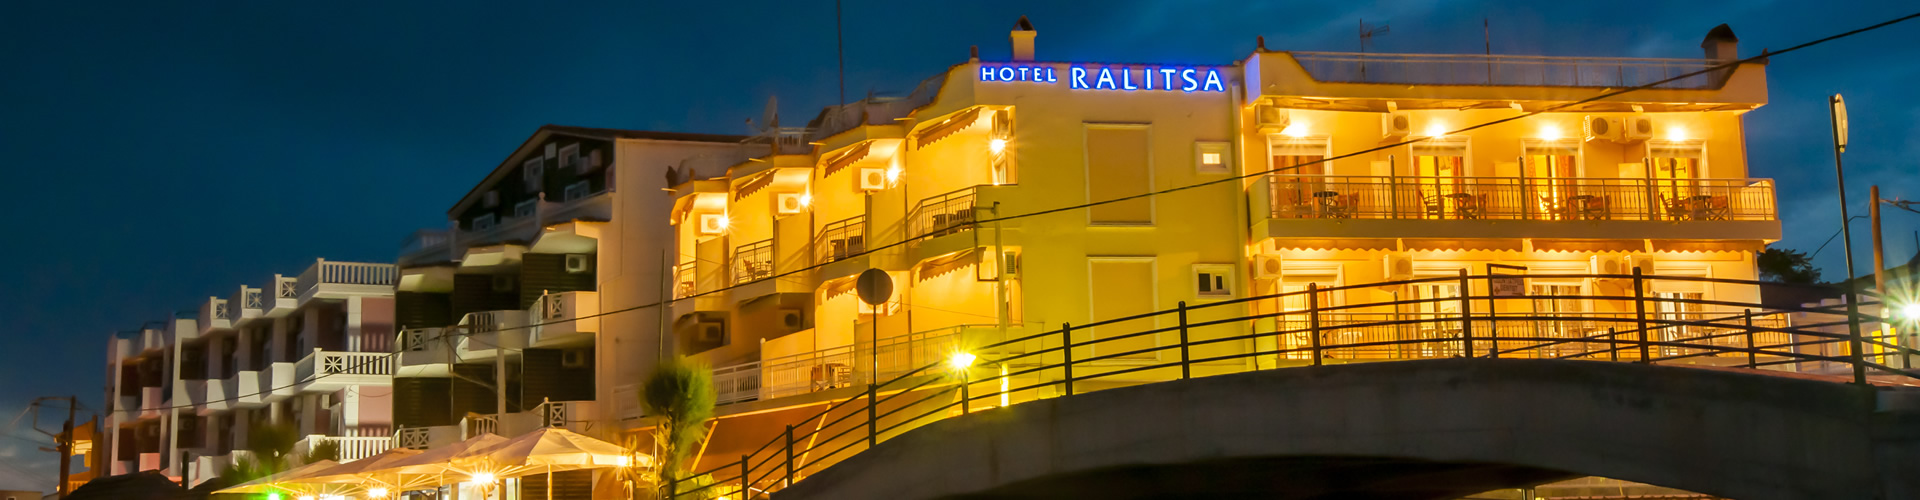 Hotel Ralitsa.jpg